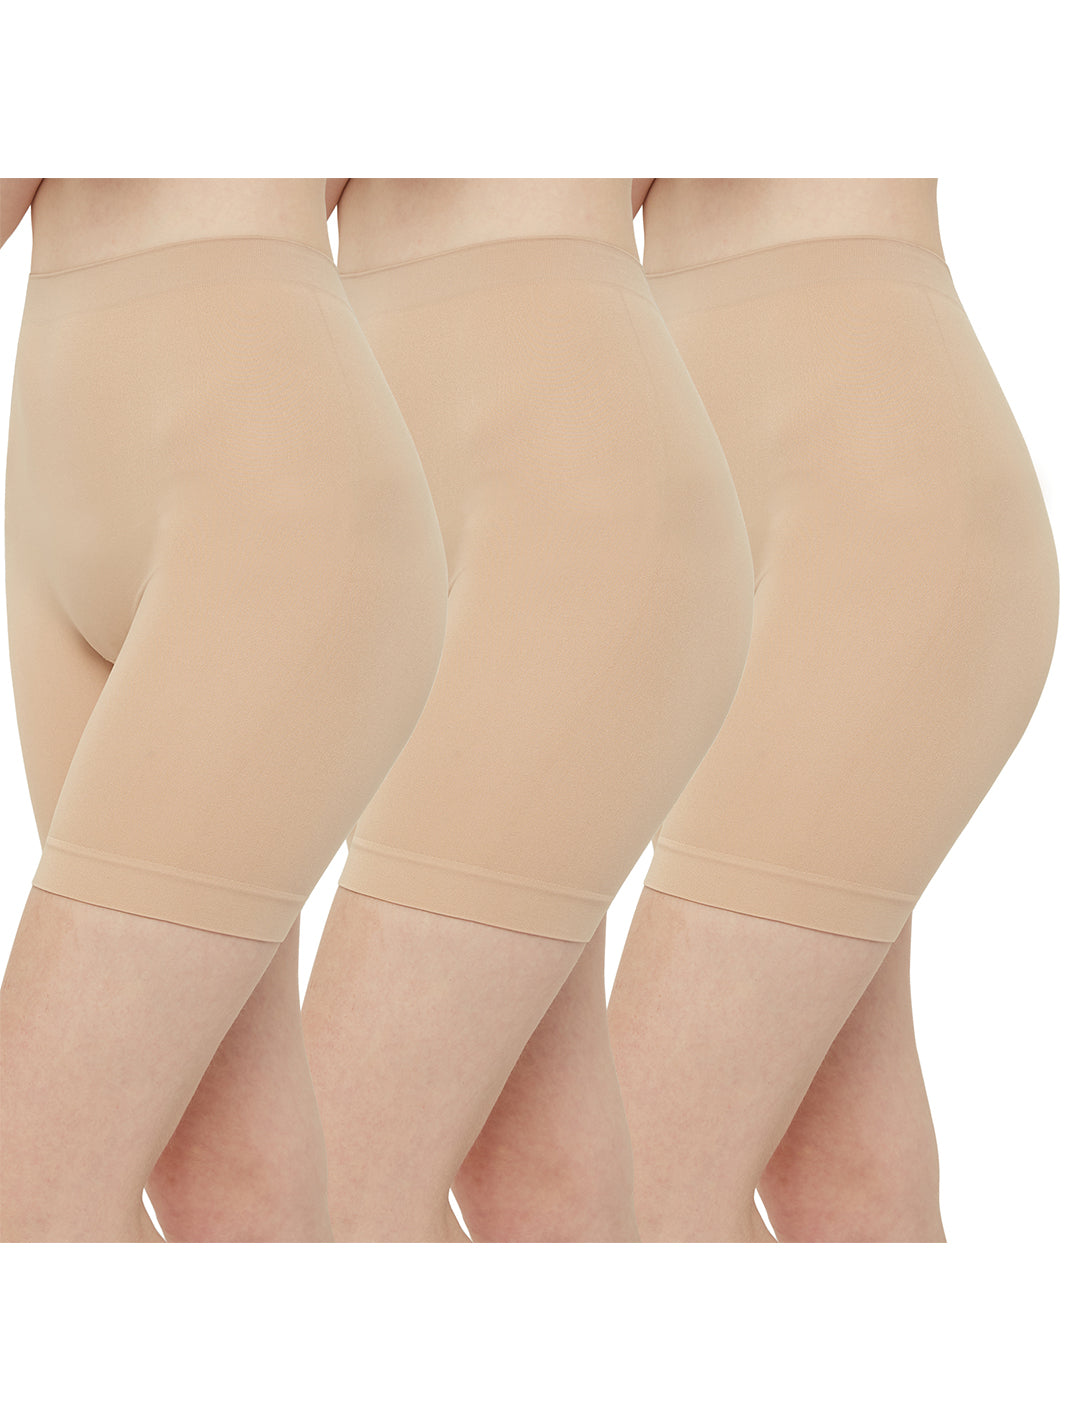 3 Pack Slip Shorts for Women Under Dress Comfortable Smooth Boyshorts  Panties Biker Shorts